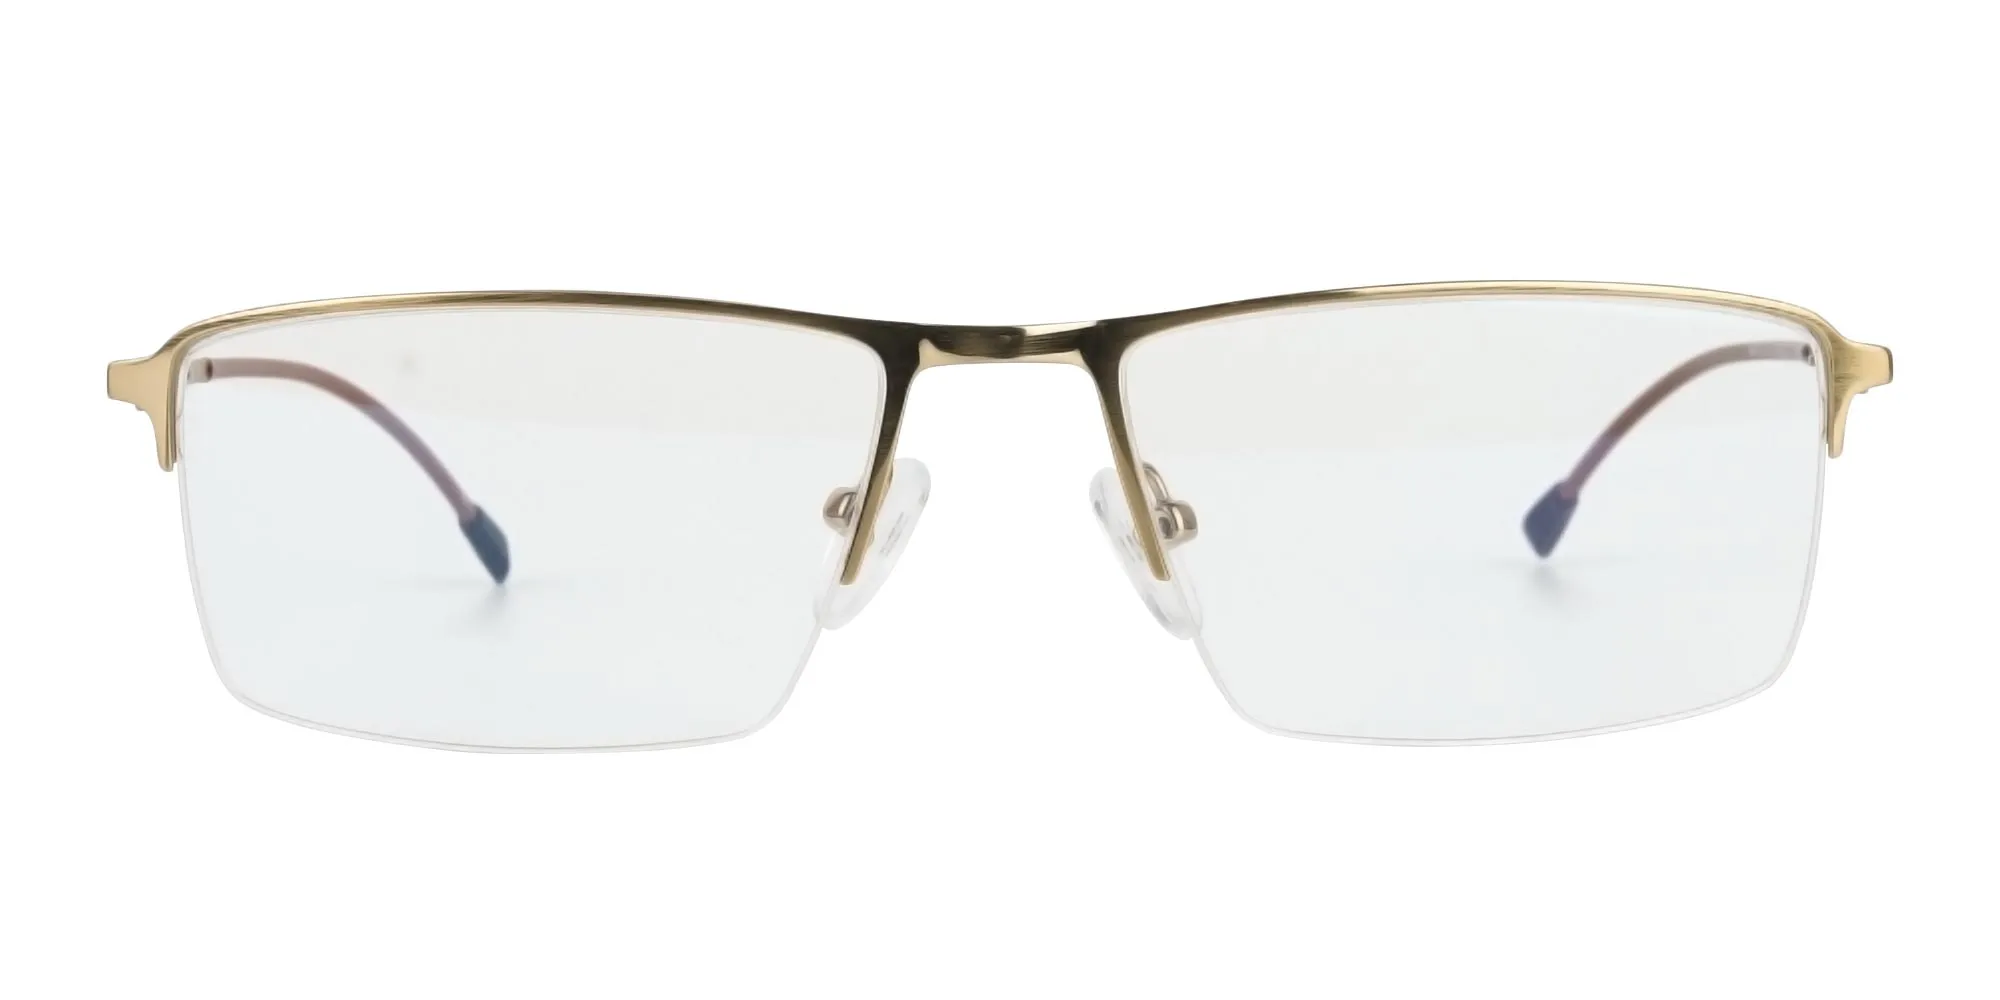 Gold Semi-Rim Glasses with Spring Hinges-2